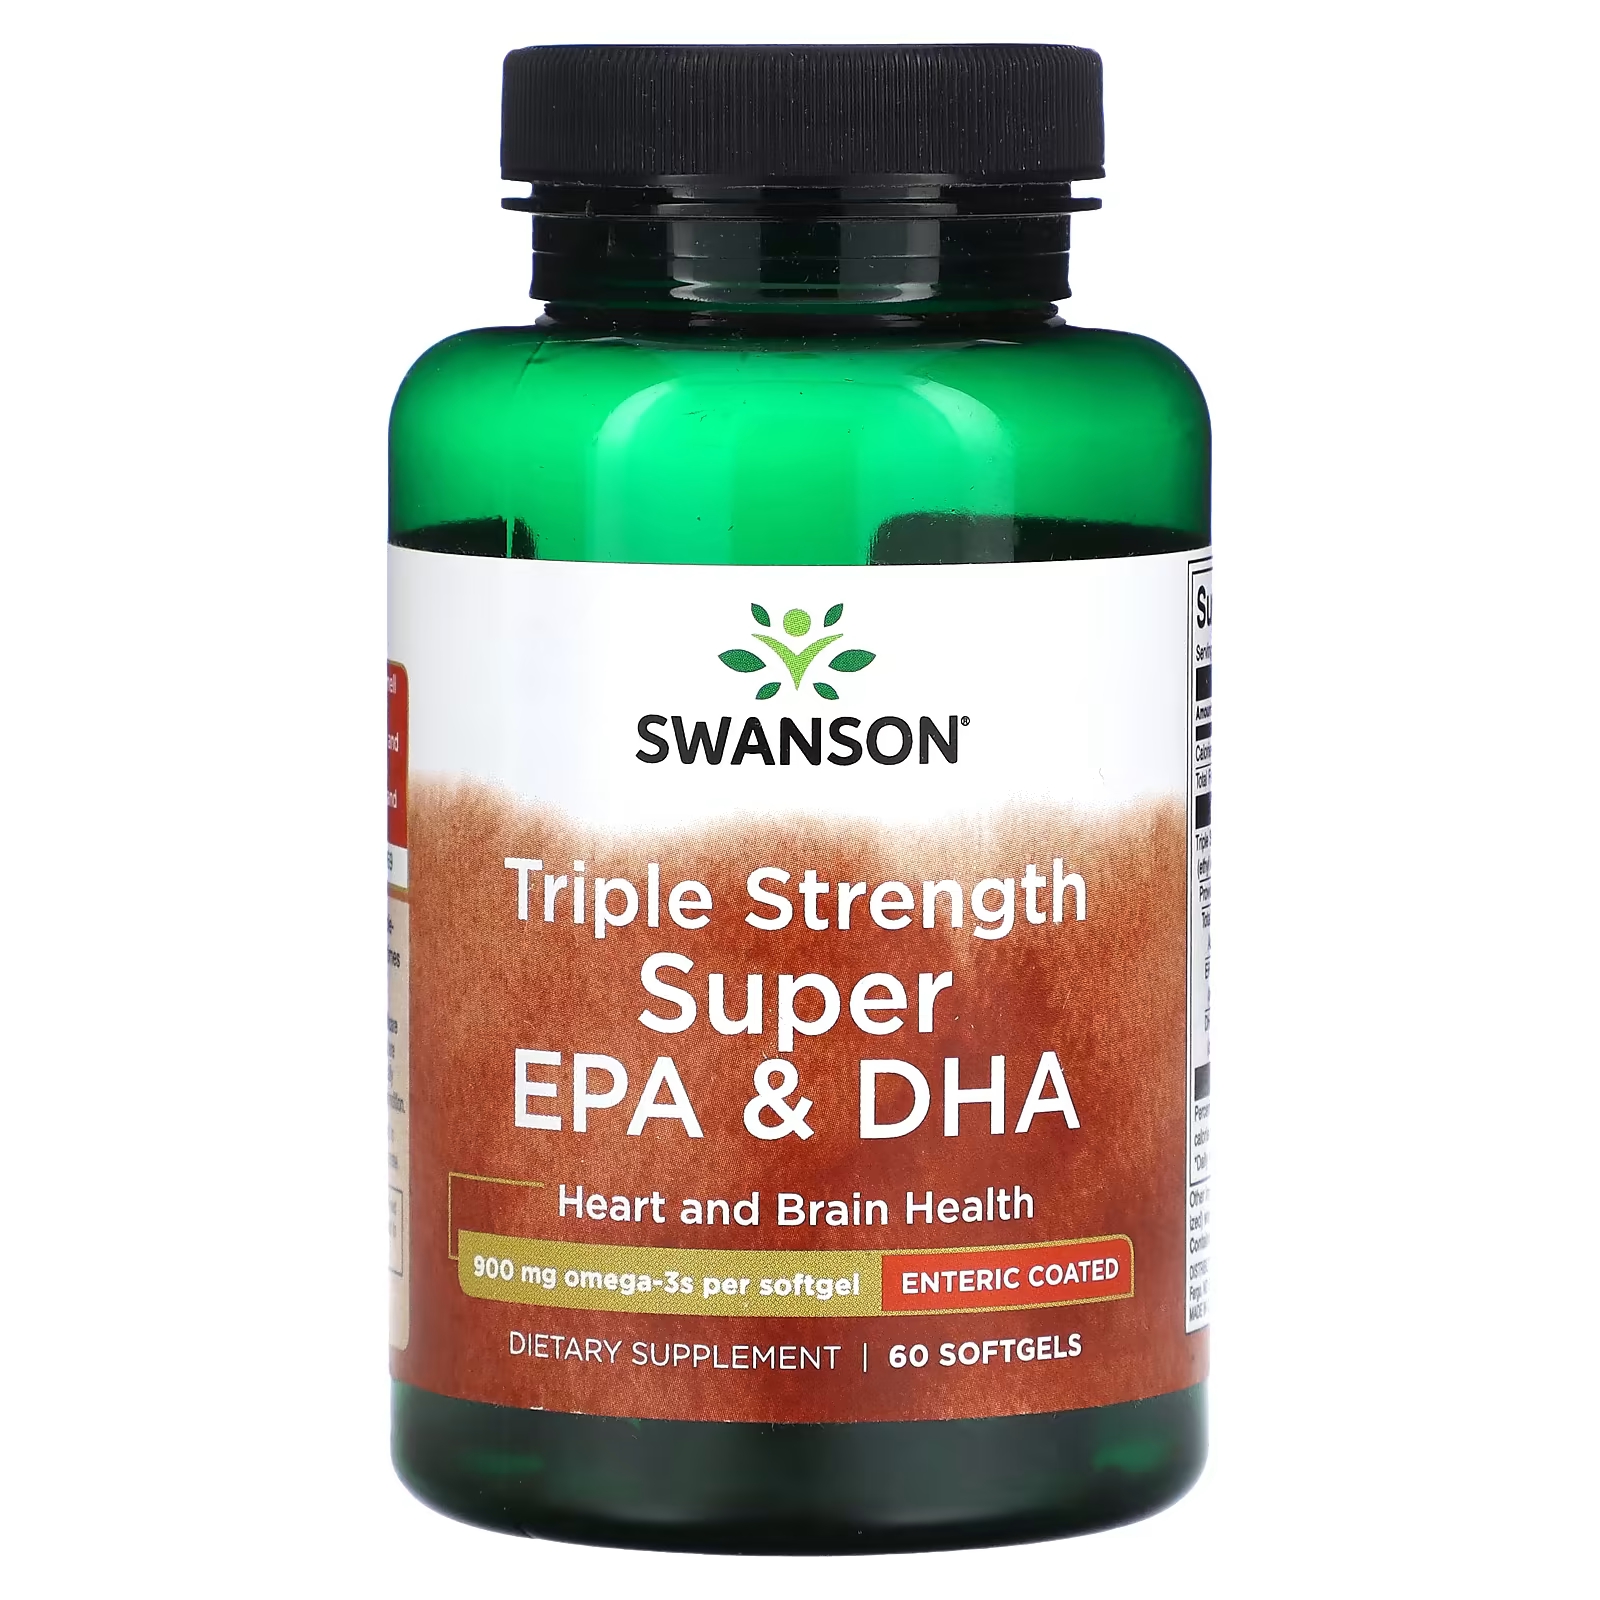 Пищевая добавка Swanson Triple Strength Super EPA и DHA 900 мг, 60 мягких таблеток пищевая добавка natural dynamix krill oil dx premium dha и epa 1000 мг 60 мягких таблеток